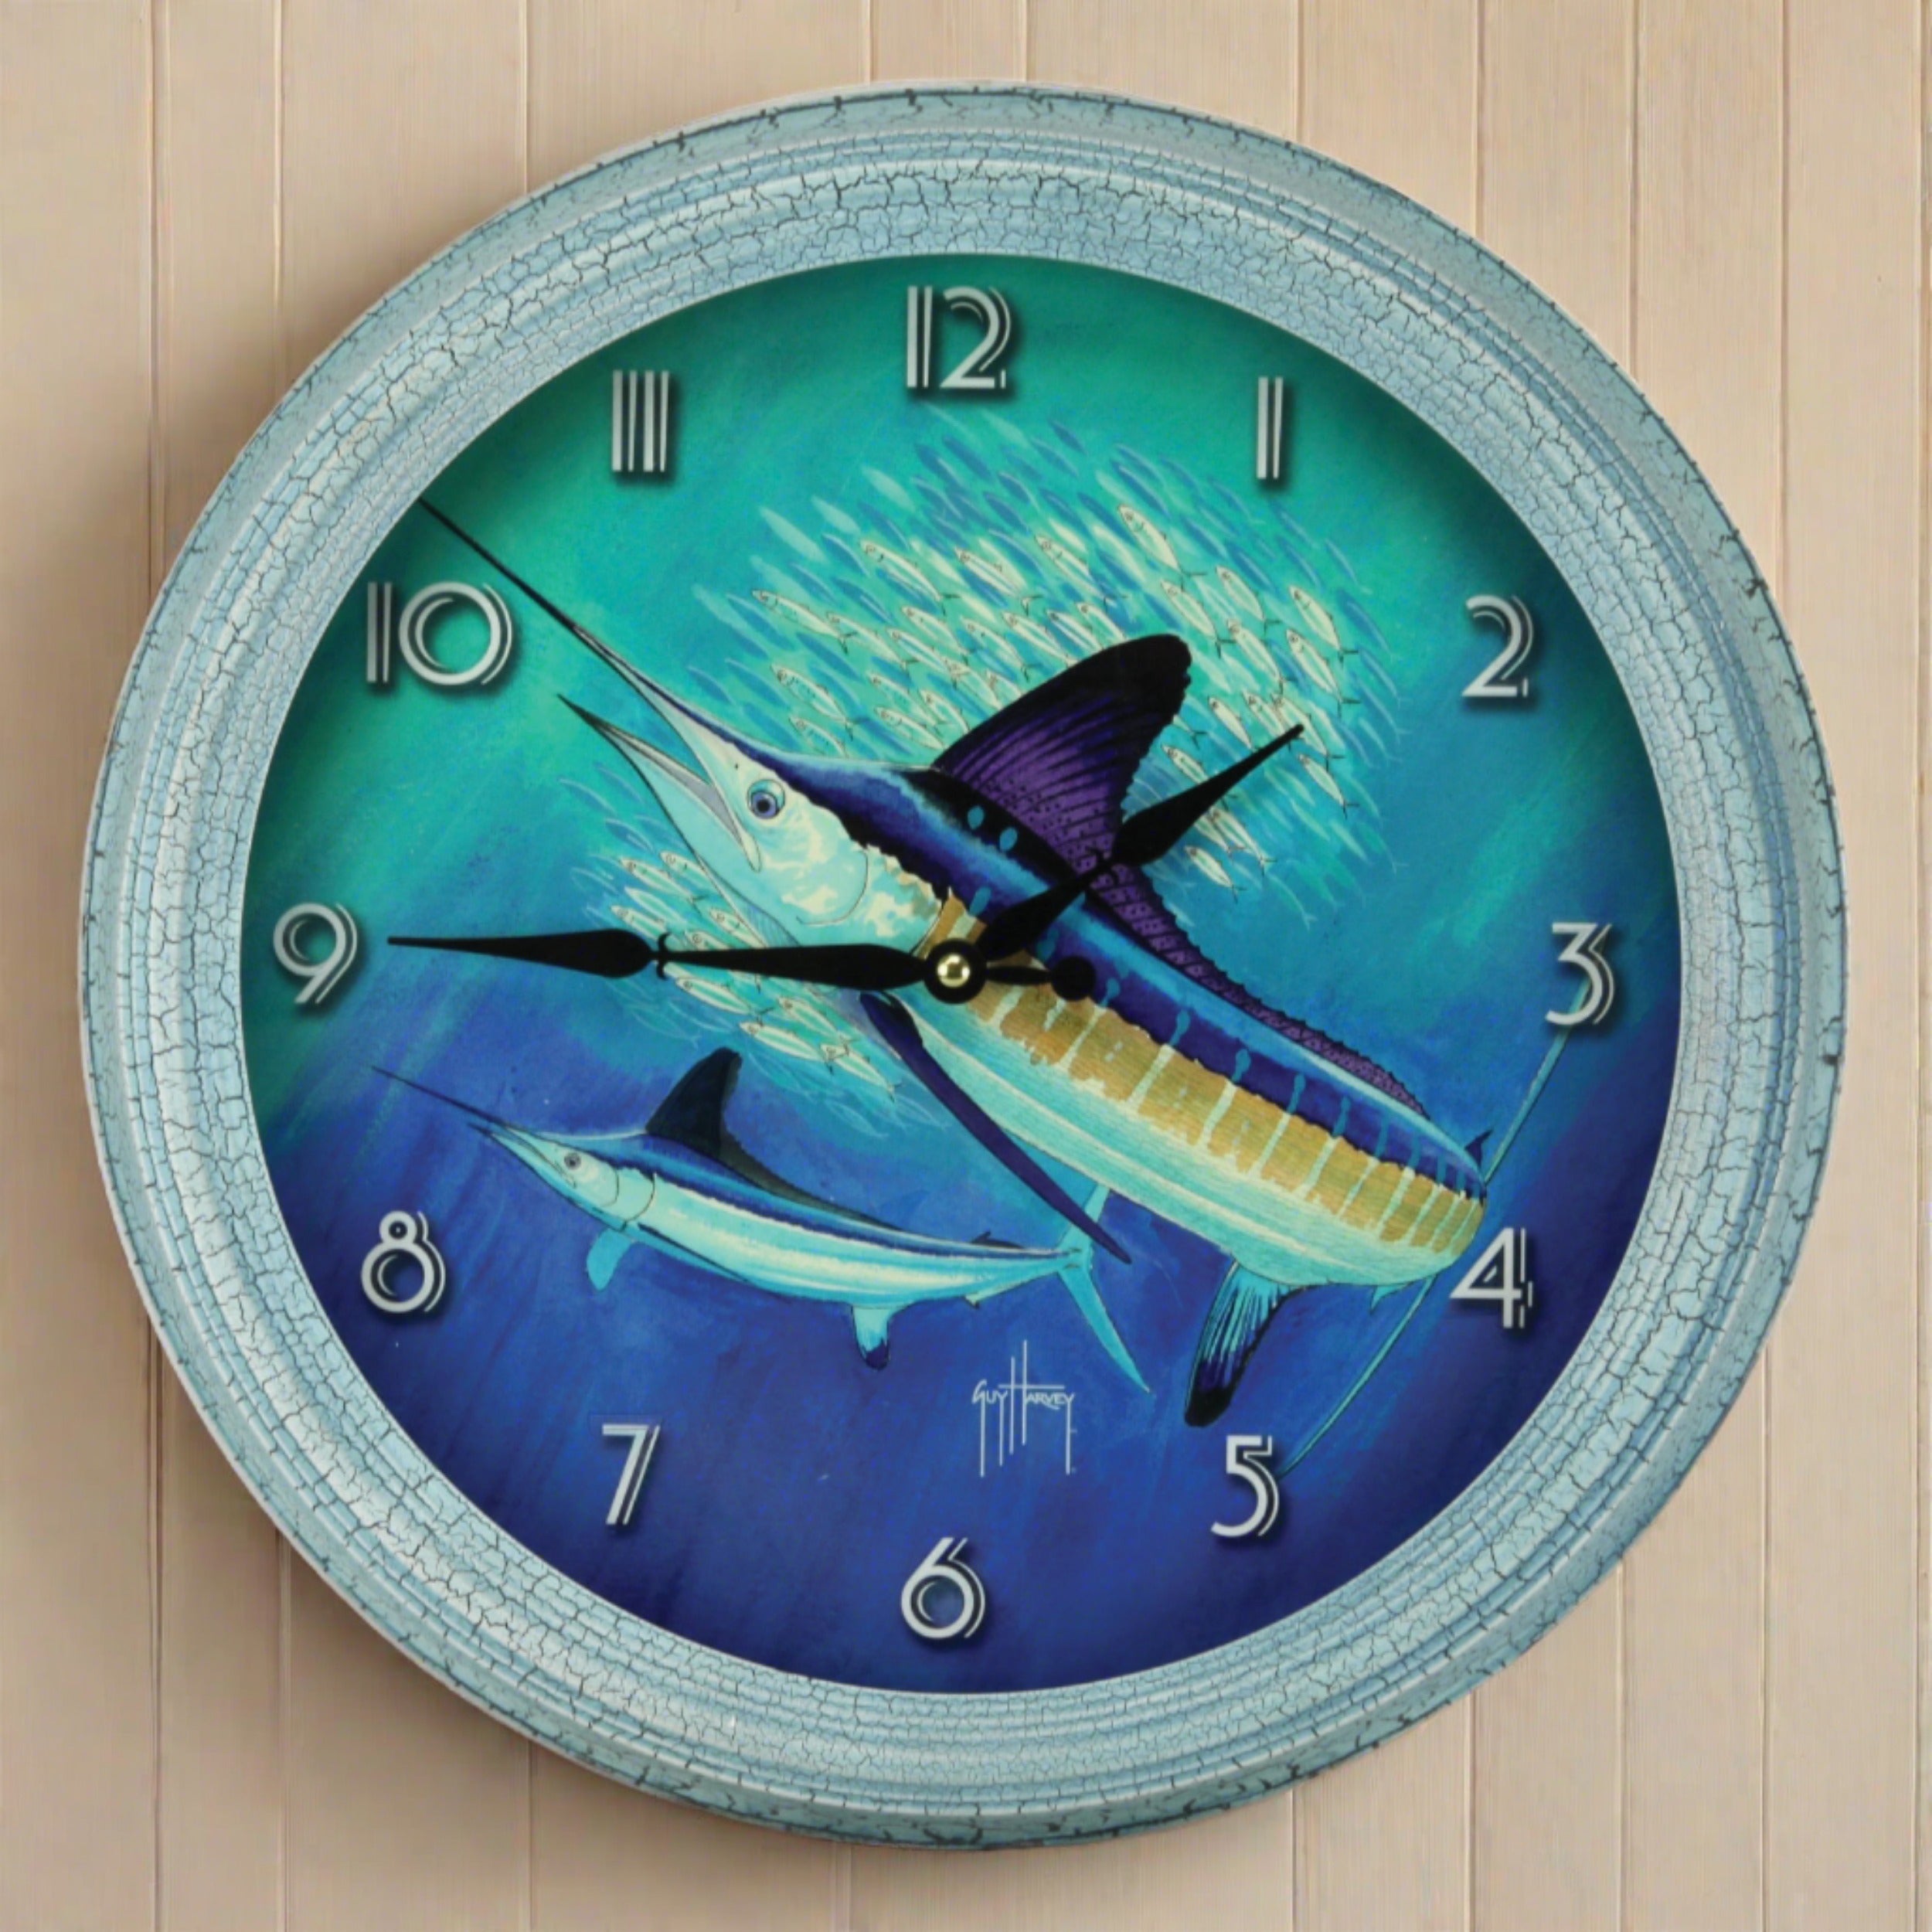  Sturgeon Fish Round Wall Clock, Battery Operated